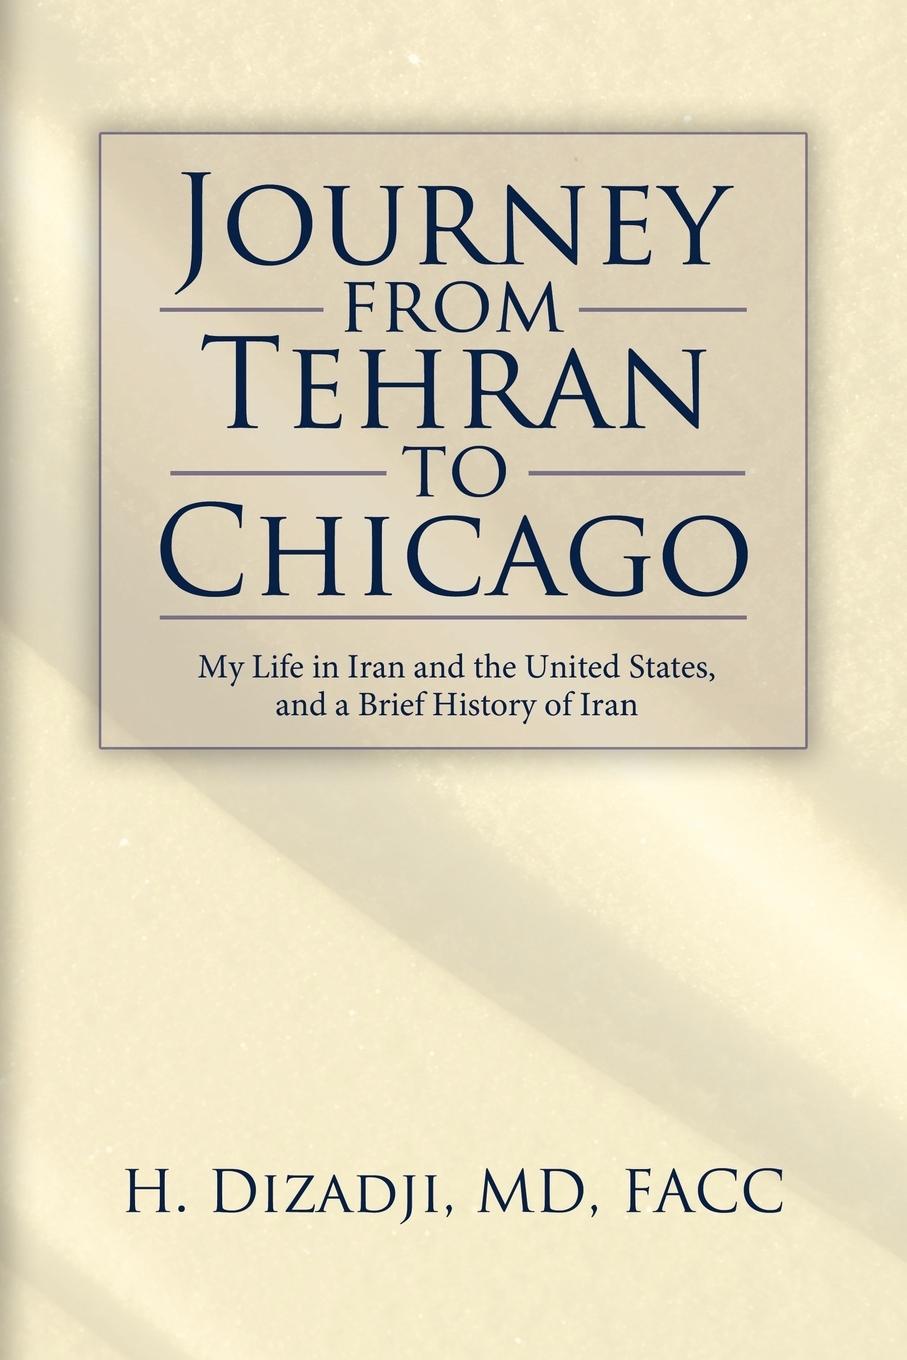 Journey from Tehran to Chicago - H. Dizadji, Md Dizadji, H.